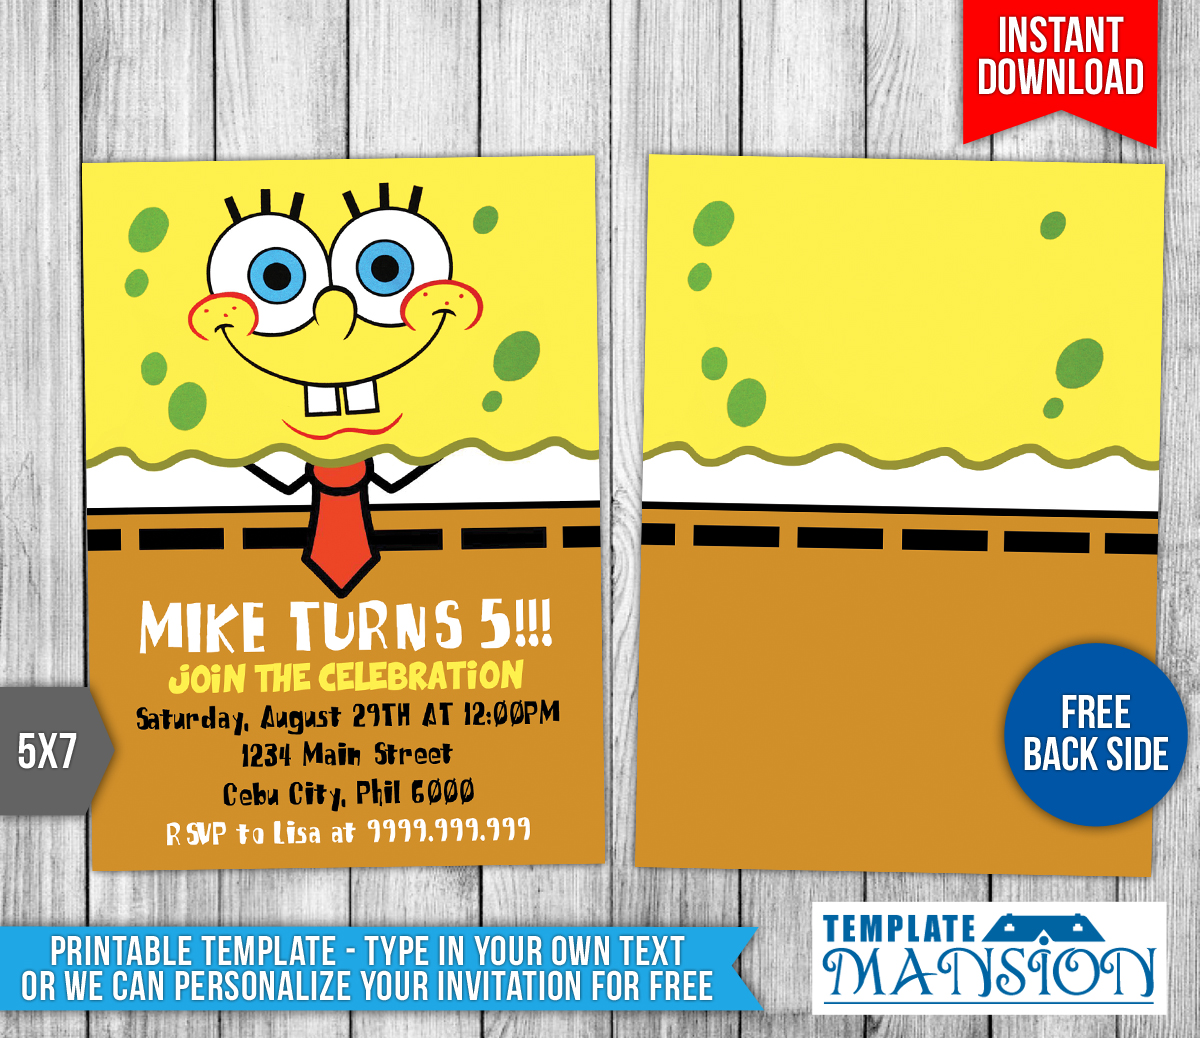 spongebob-squarepants-birthday-invitation-1-by-templatemansion-on